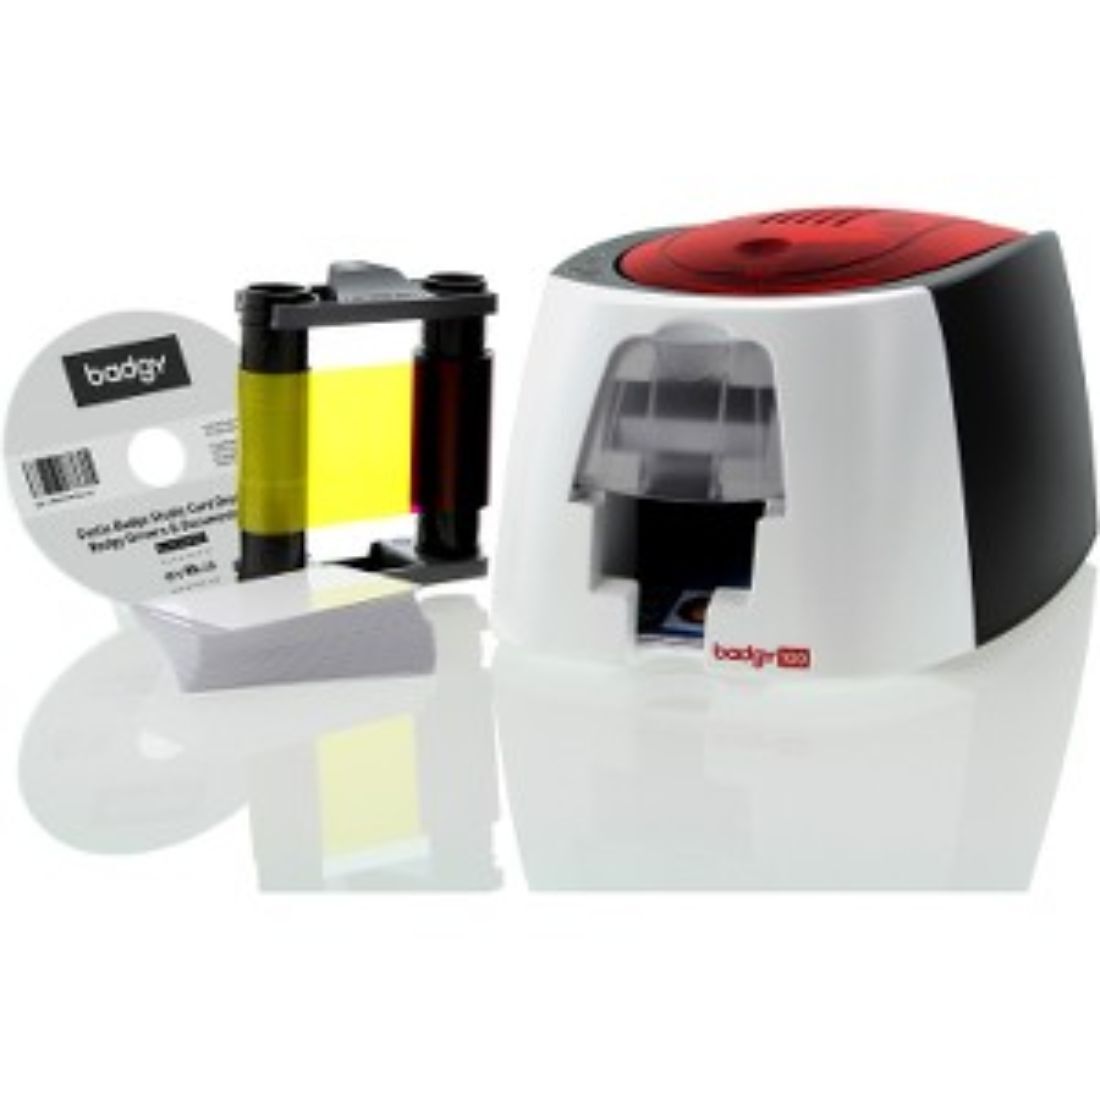 Evolis Badgy100 Plastic Color ID Card Printer B12U0000RS